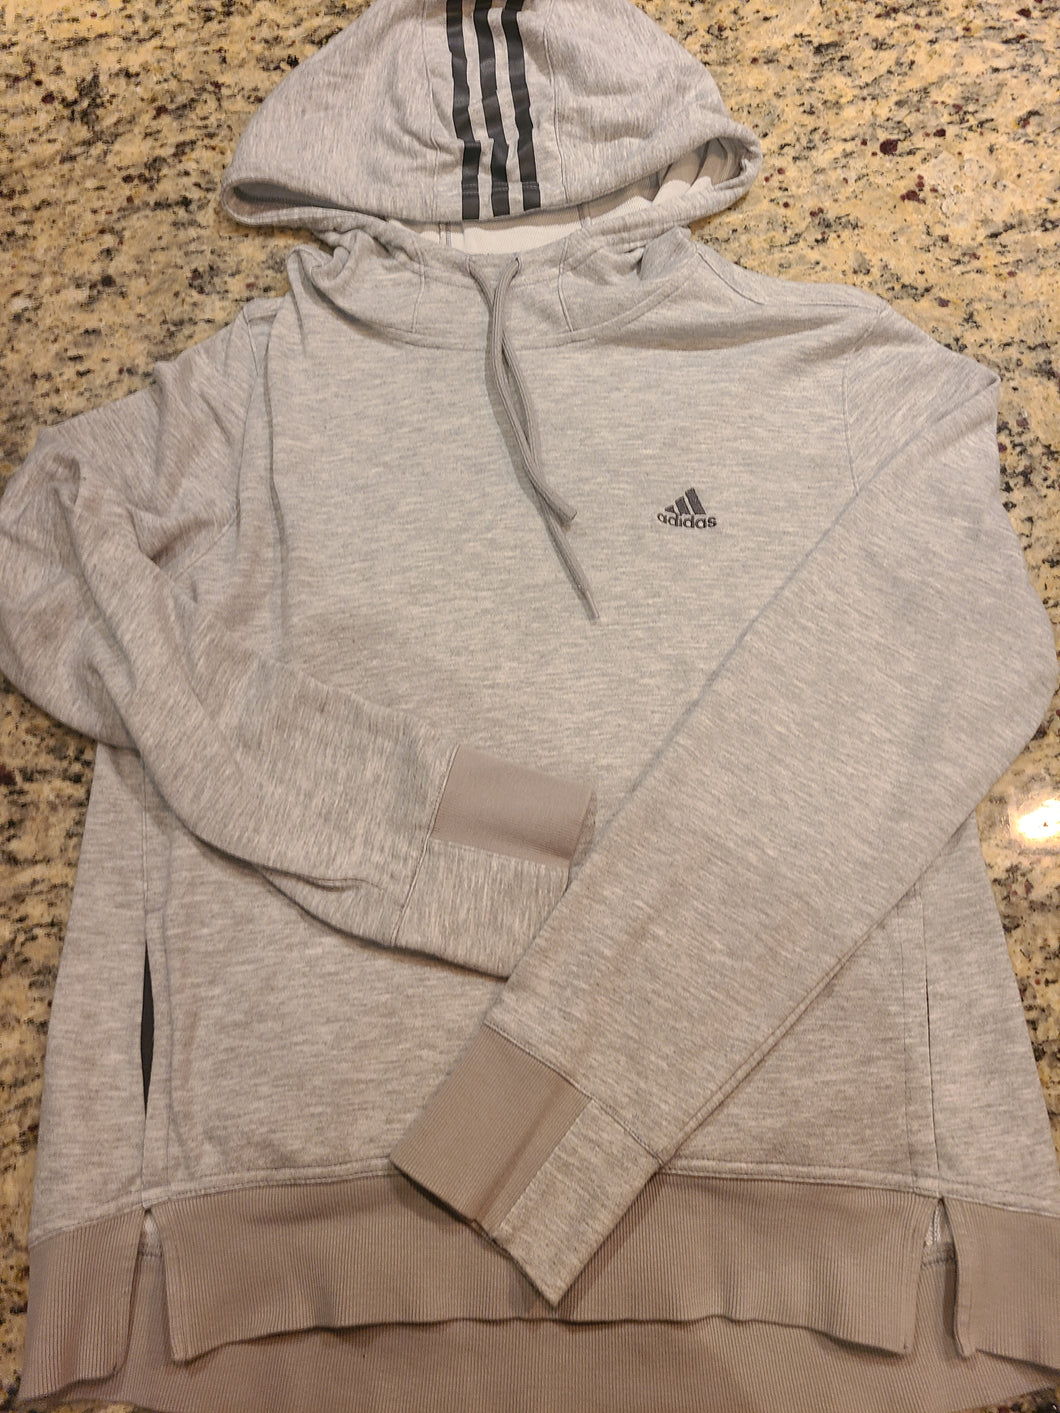 Adidas long sleeve light weight hooded sweatshirt  Medium